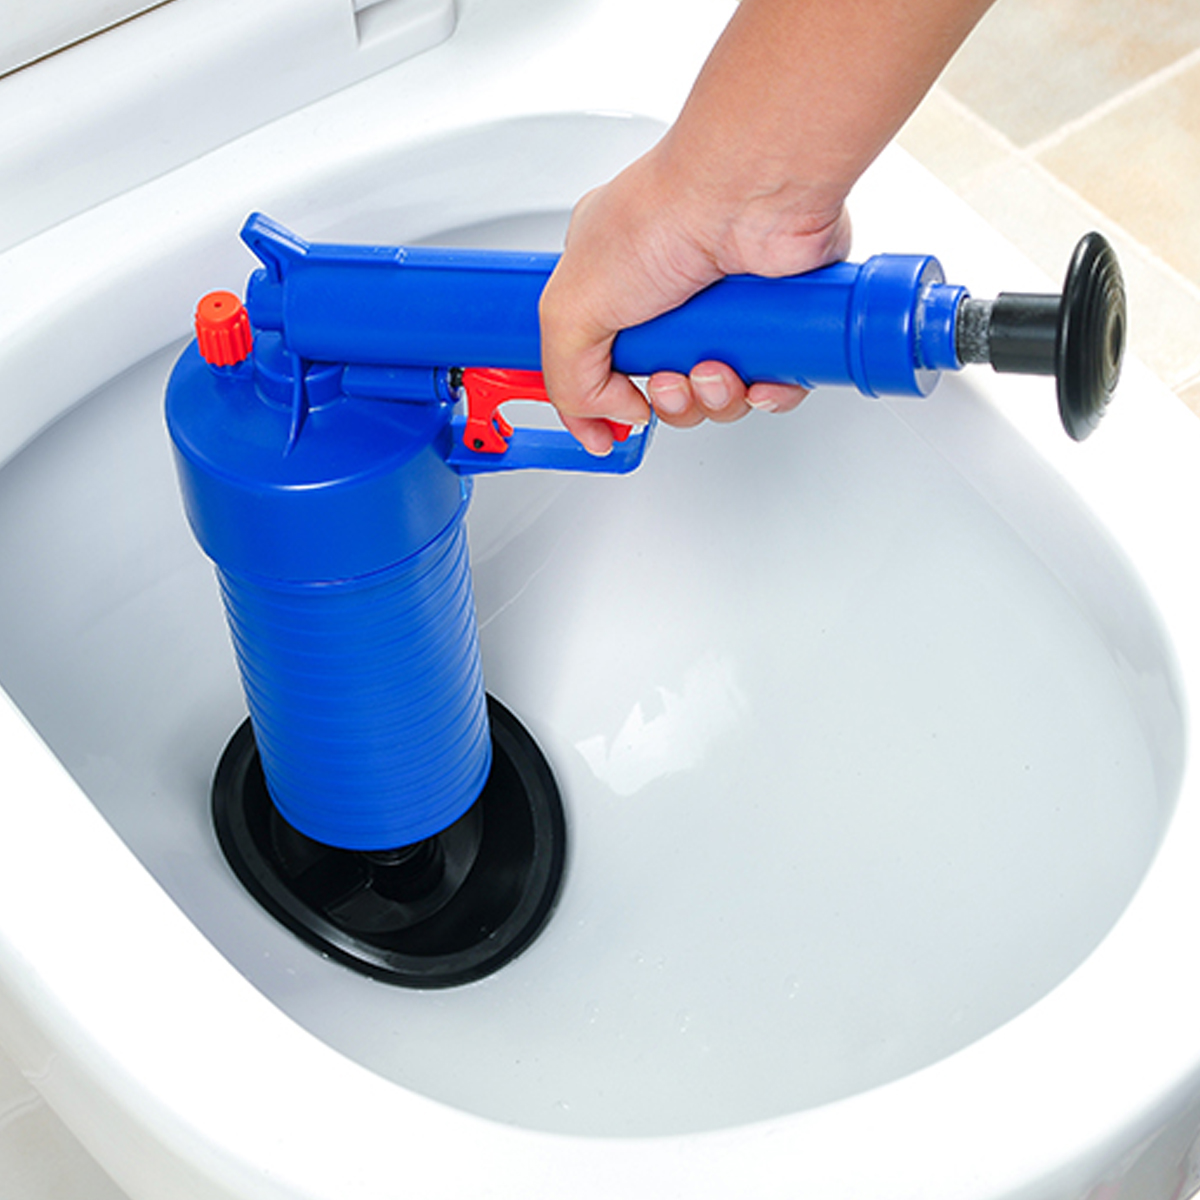 Air-Pump-Drain-Sink-Plunger-Bathroom-Toilet-Sewer-Blockage-Remover-Unblocker-1568102-3